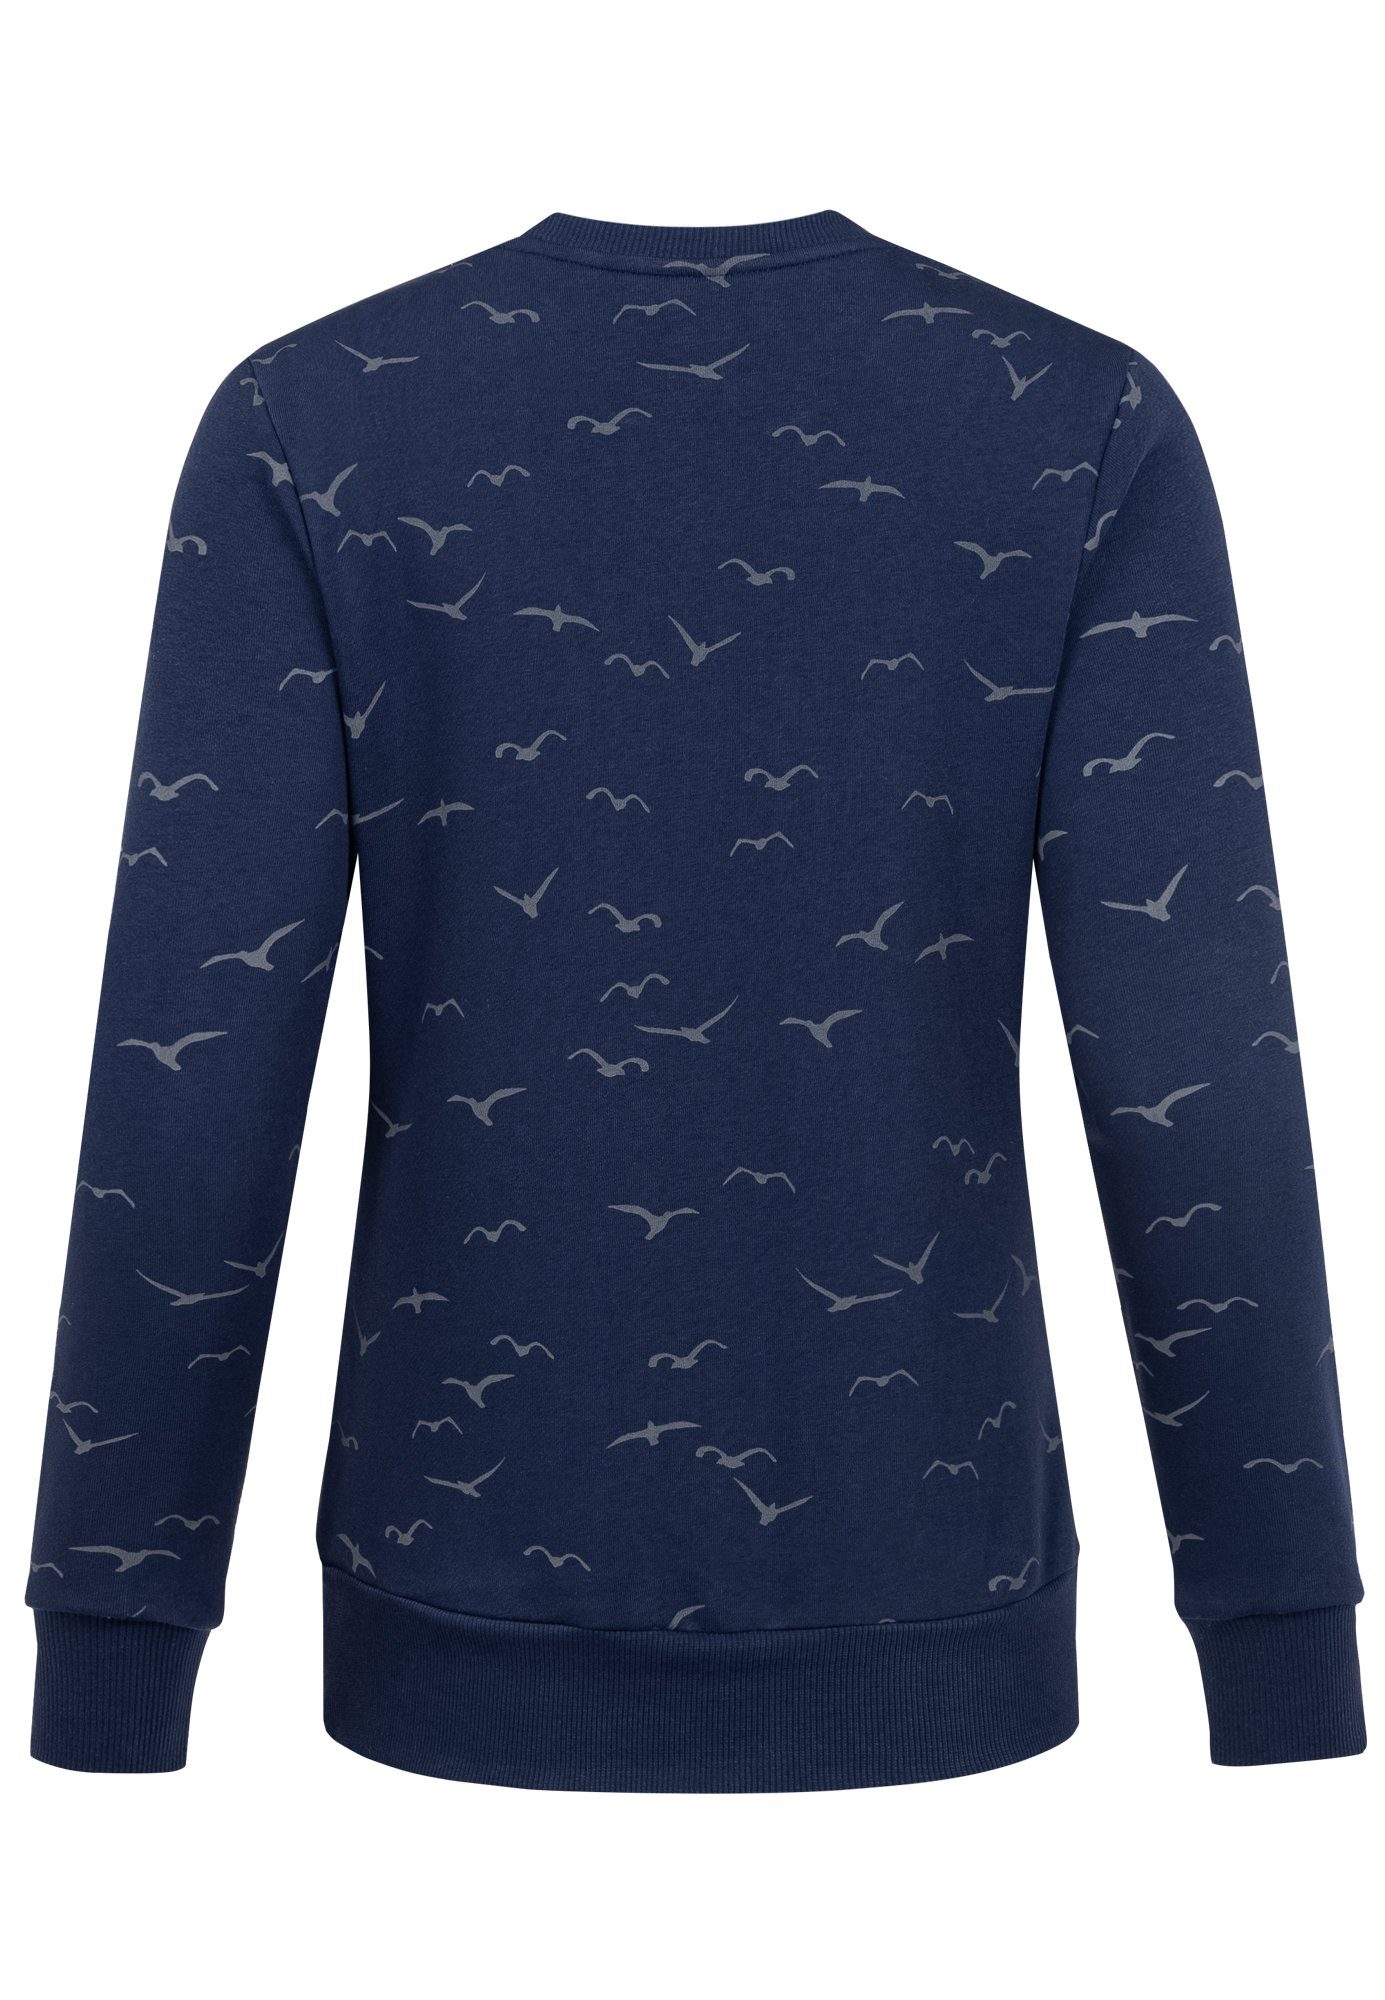 Sweatshirt Pullover Damen Navyblau ANA Sweatjacke Print Hoodie Kapuzenpullover REPUBLIX